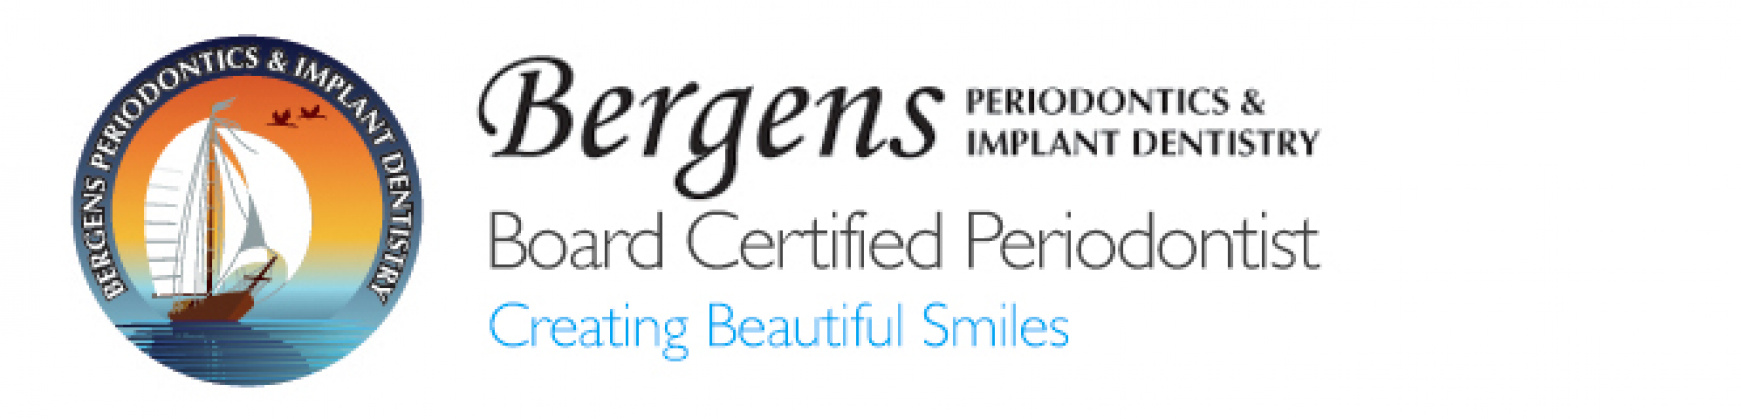 3862582213 Bergens Periodontics & Implant Dentistry of Daytona